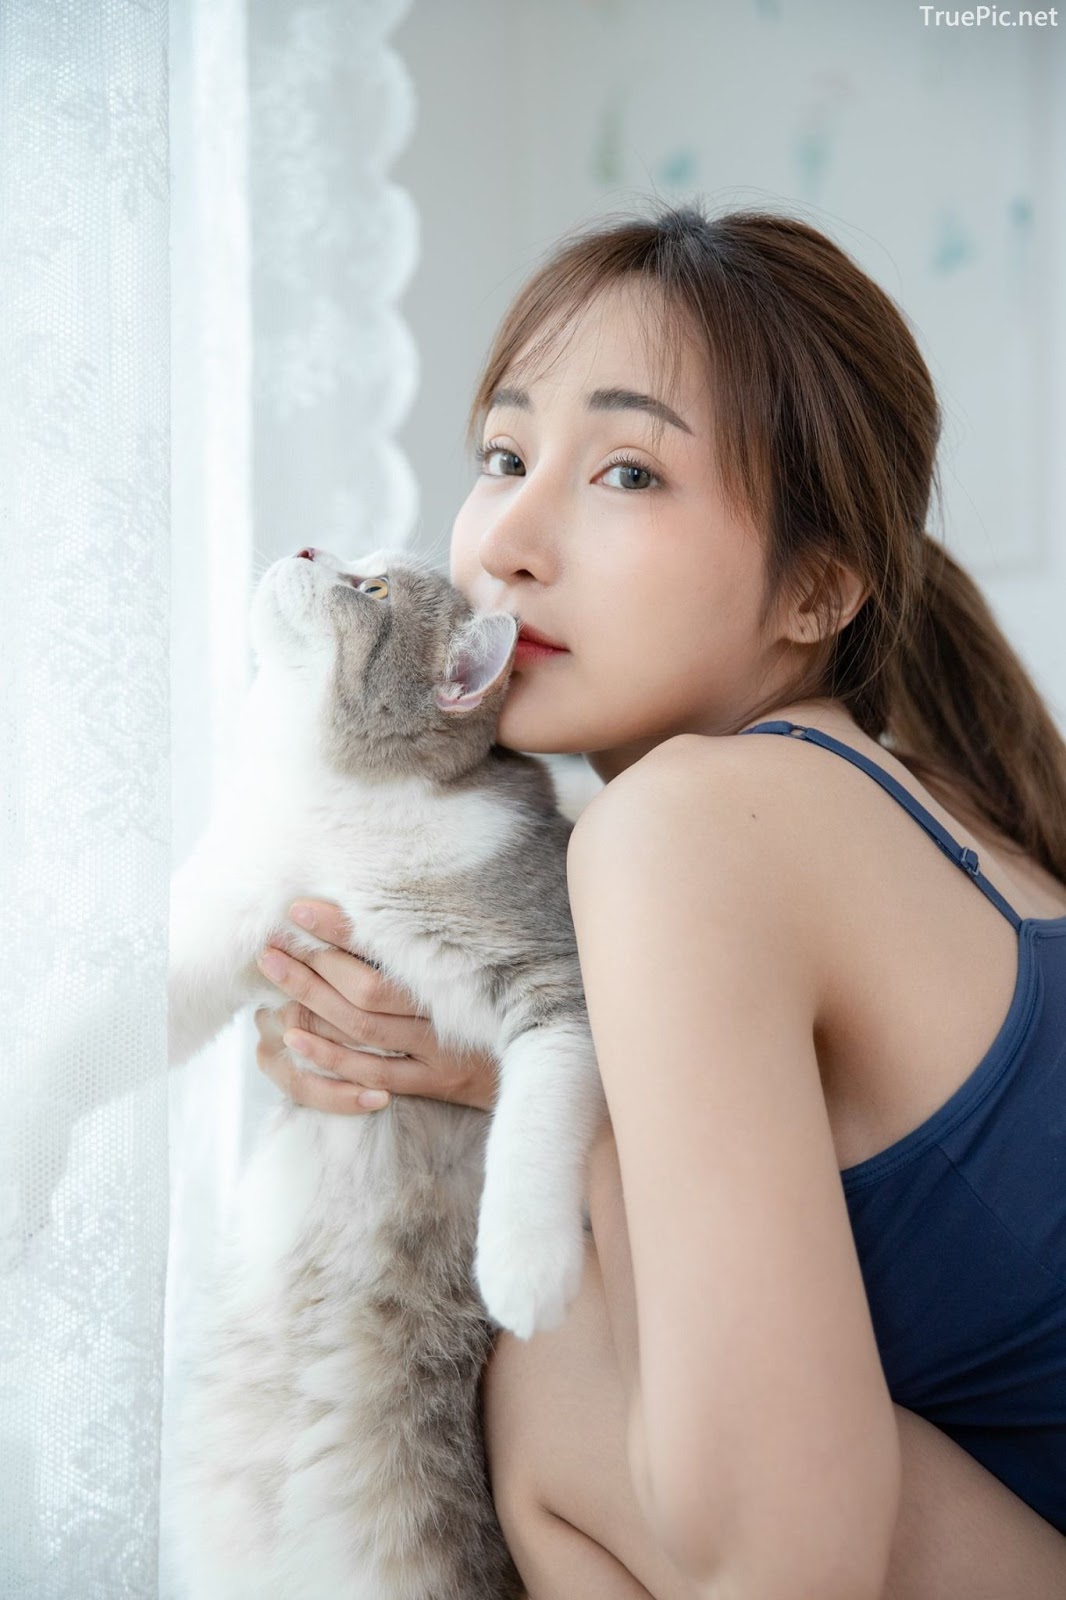 Thailand model - Thanyarat Charoenpornkittada - Stay at home with beautiul cat - TruePic.net - Picture 9